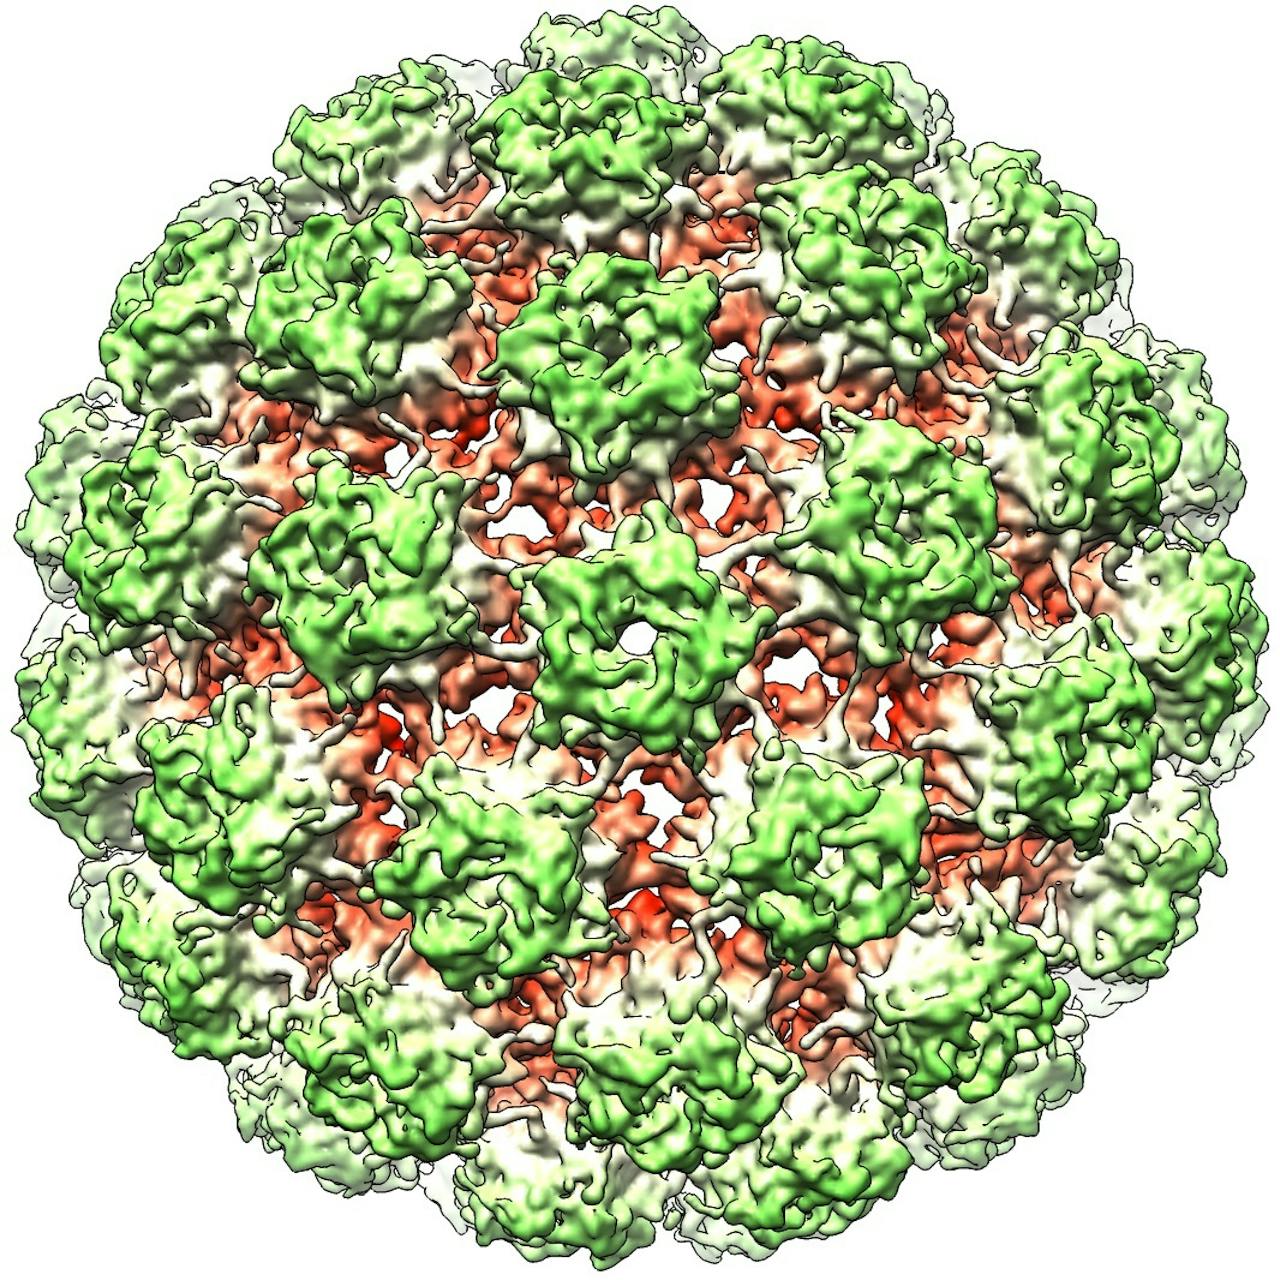 Bovine Papillomavirus